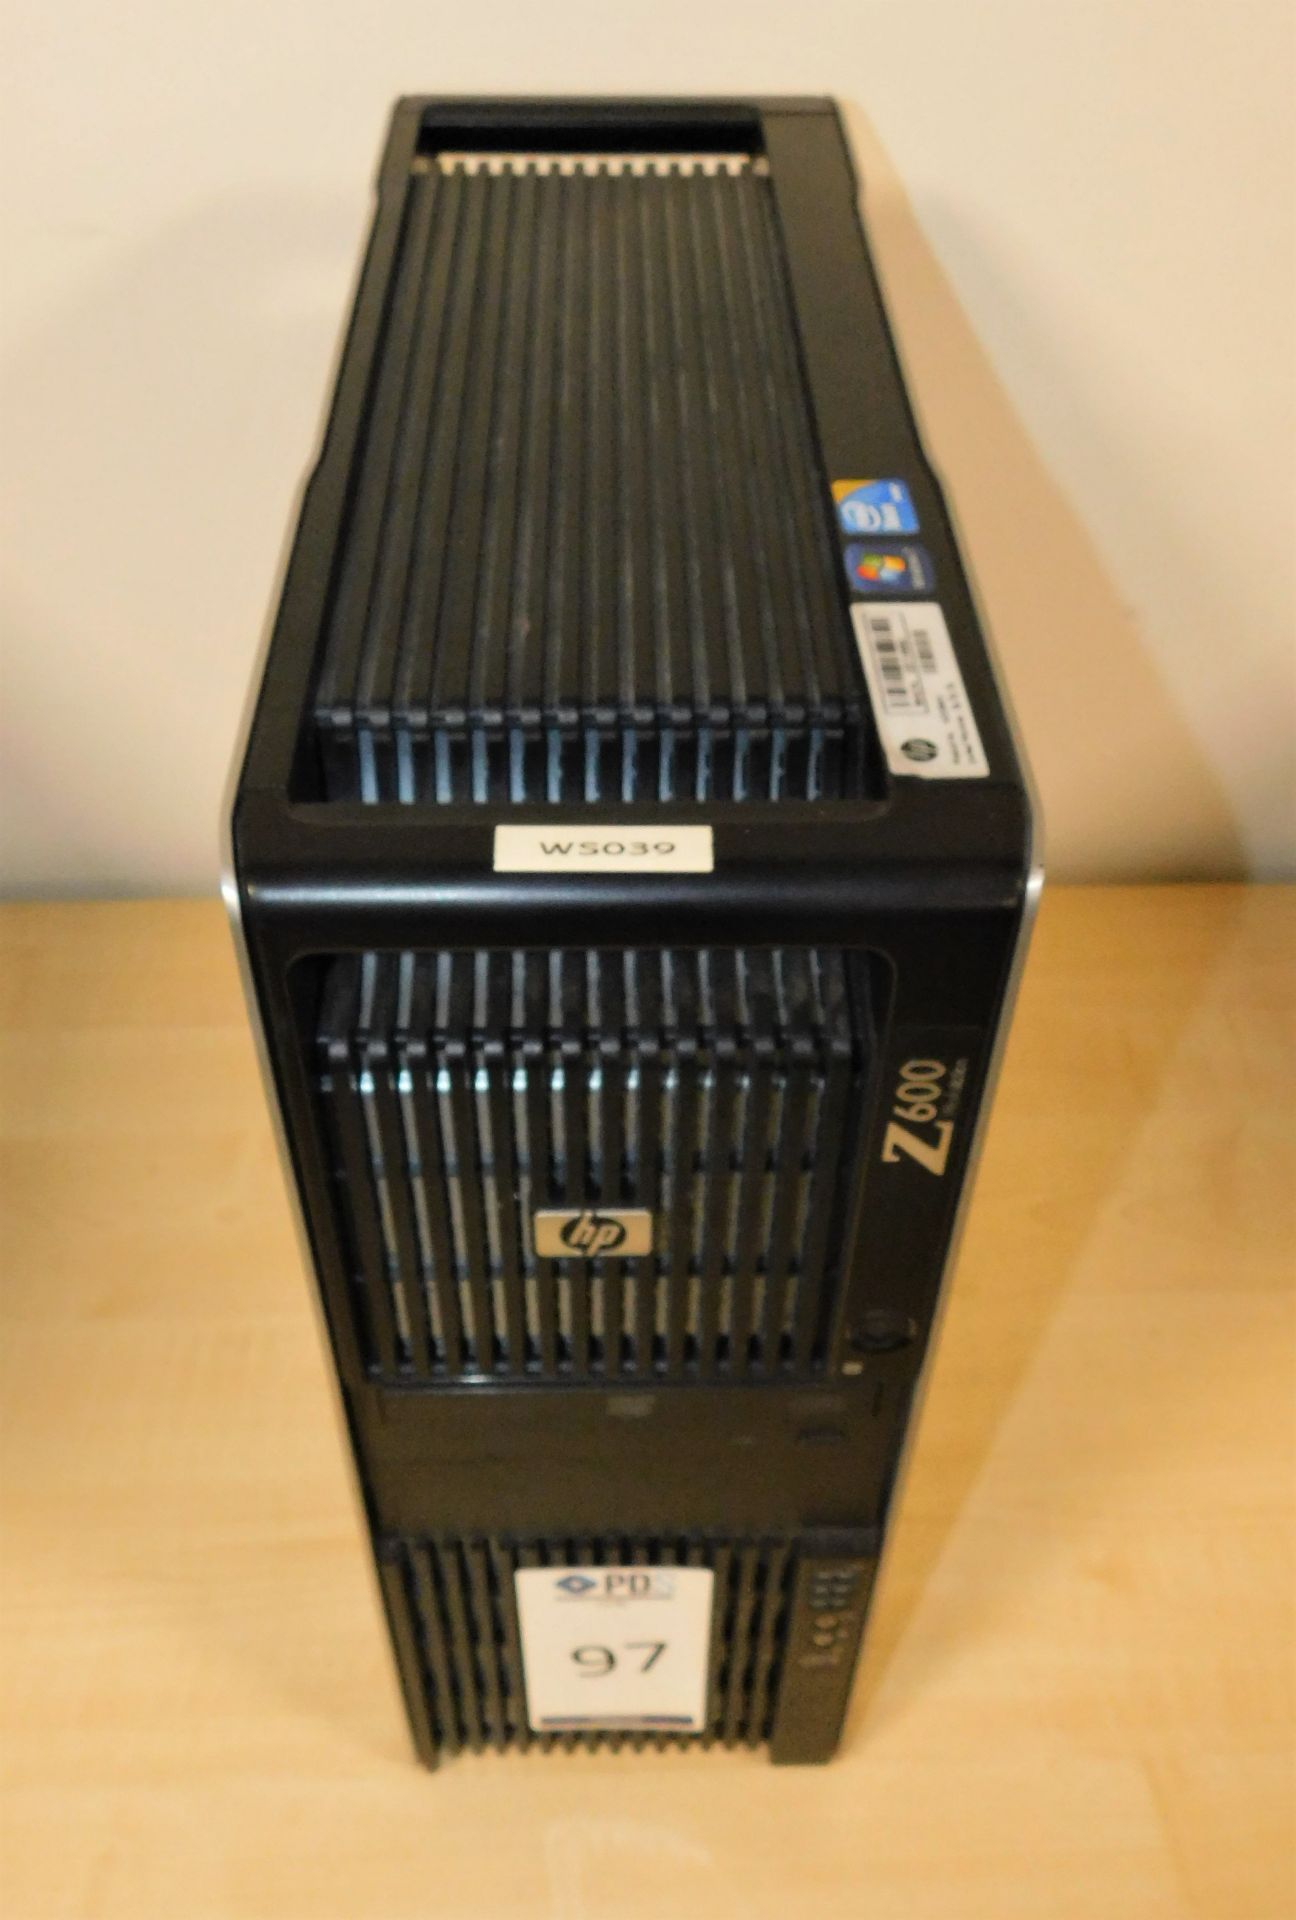 HP Z600 Xeon CPU X5650 Workstation, 2.67 GHz with 24 GB RAM & Quadro 4000 Video Card